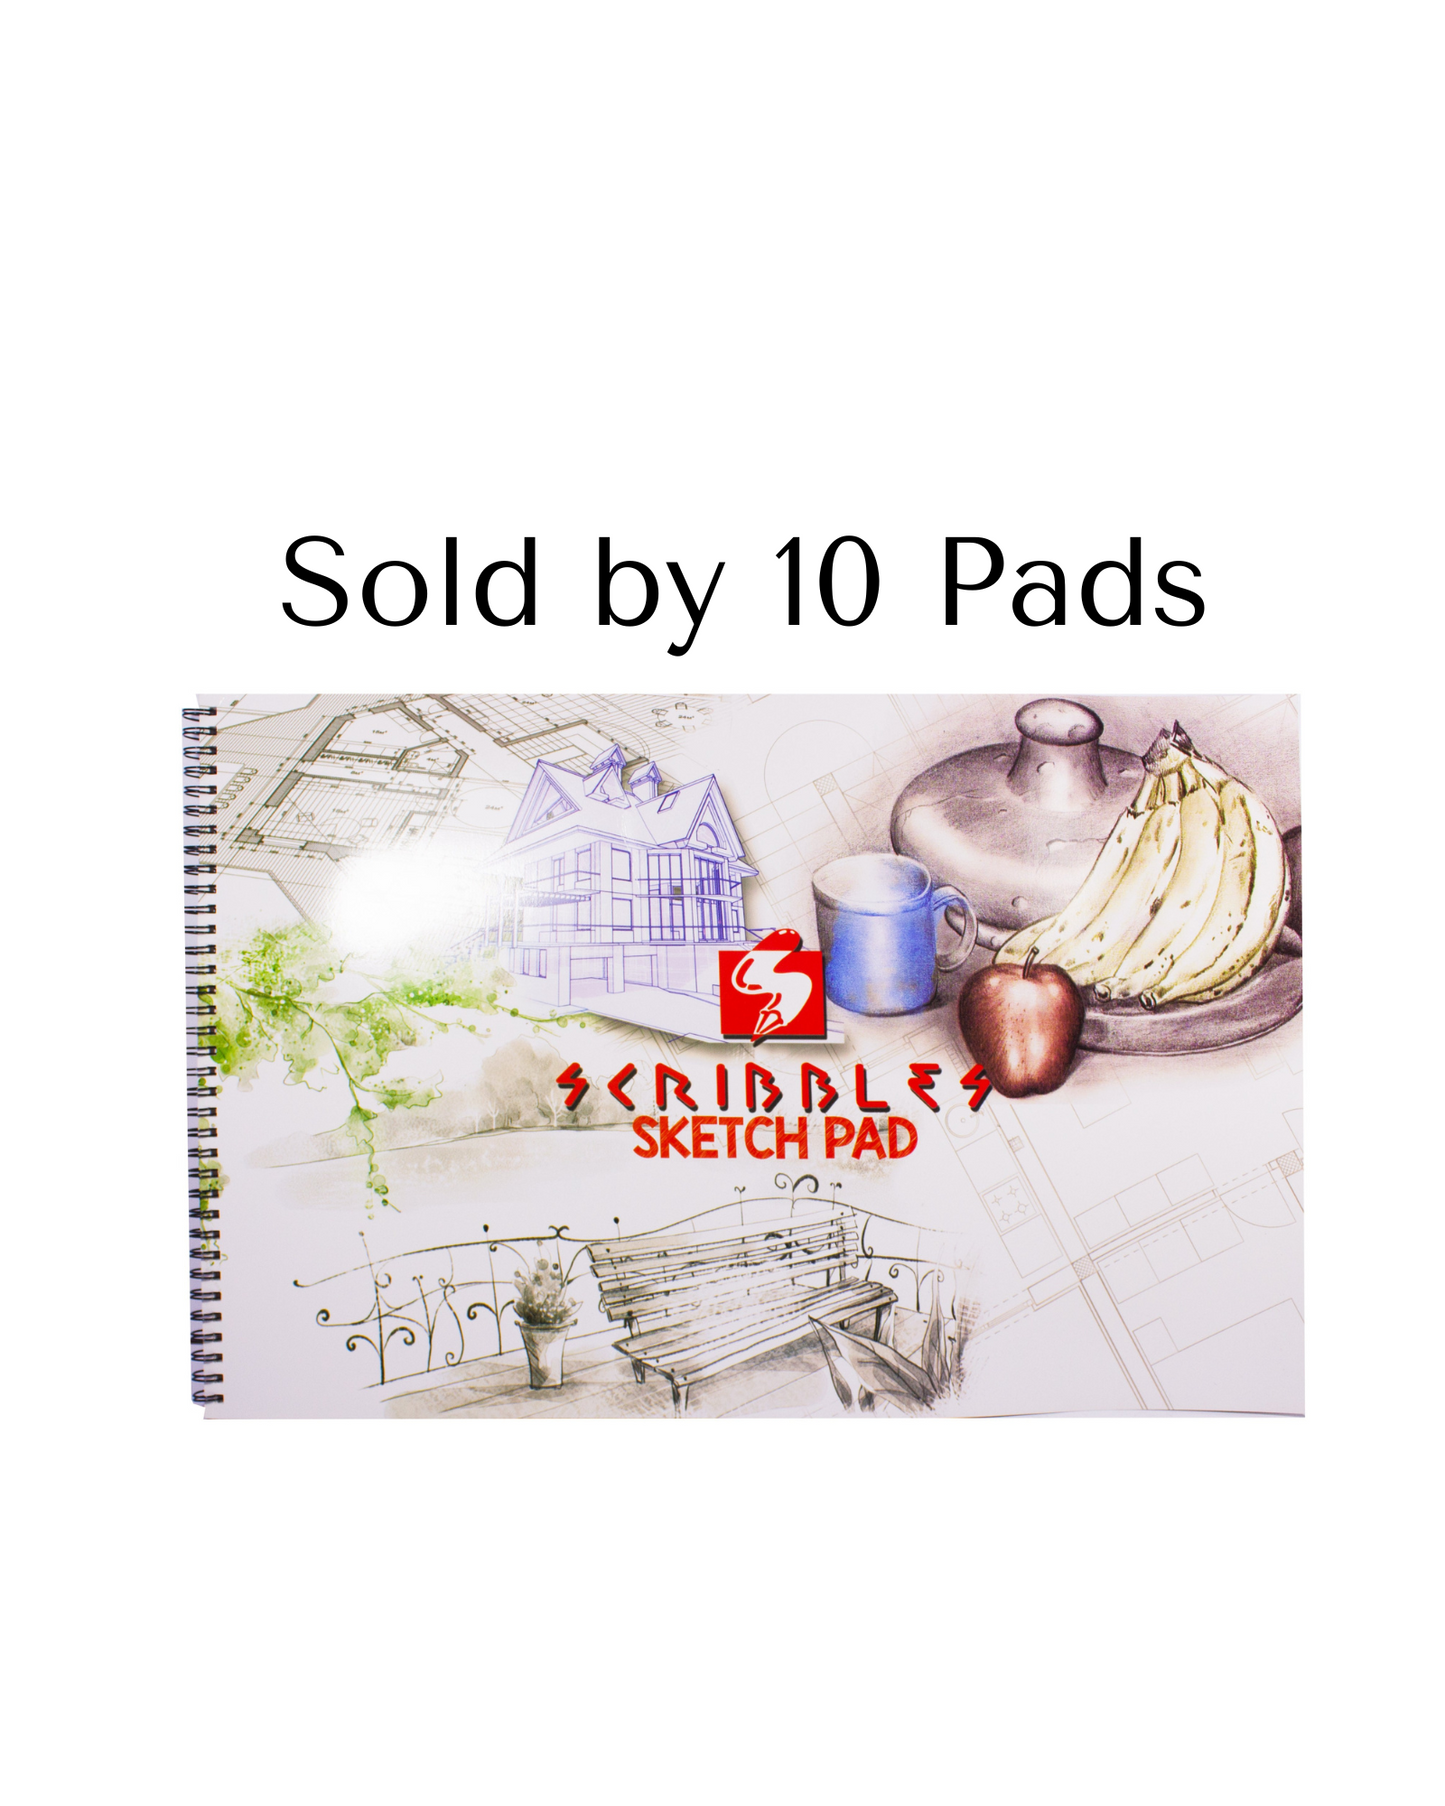 Scribbles Sketch Pad 20lvs 12x18in (10Pads)